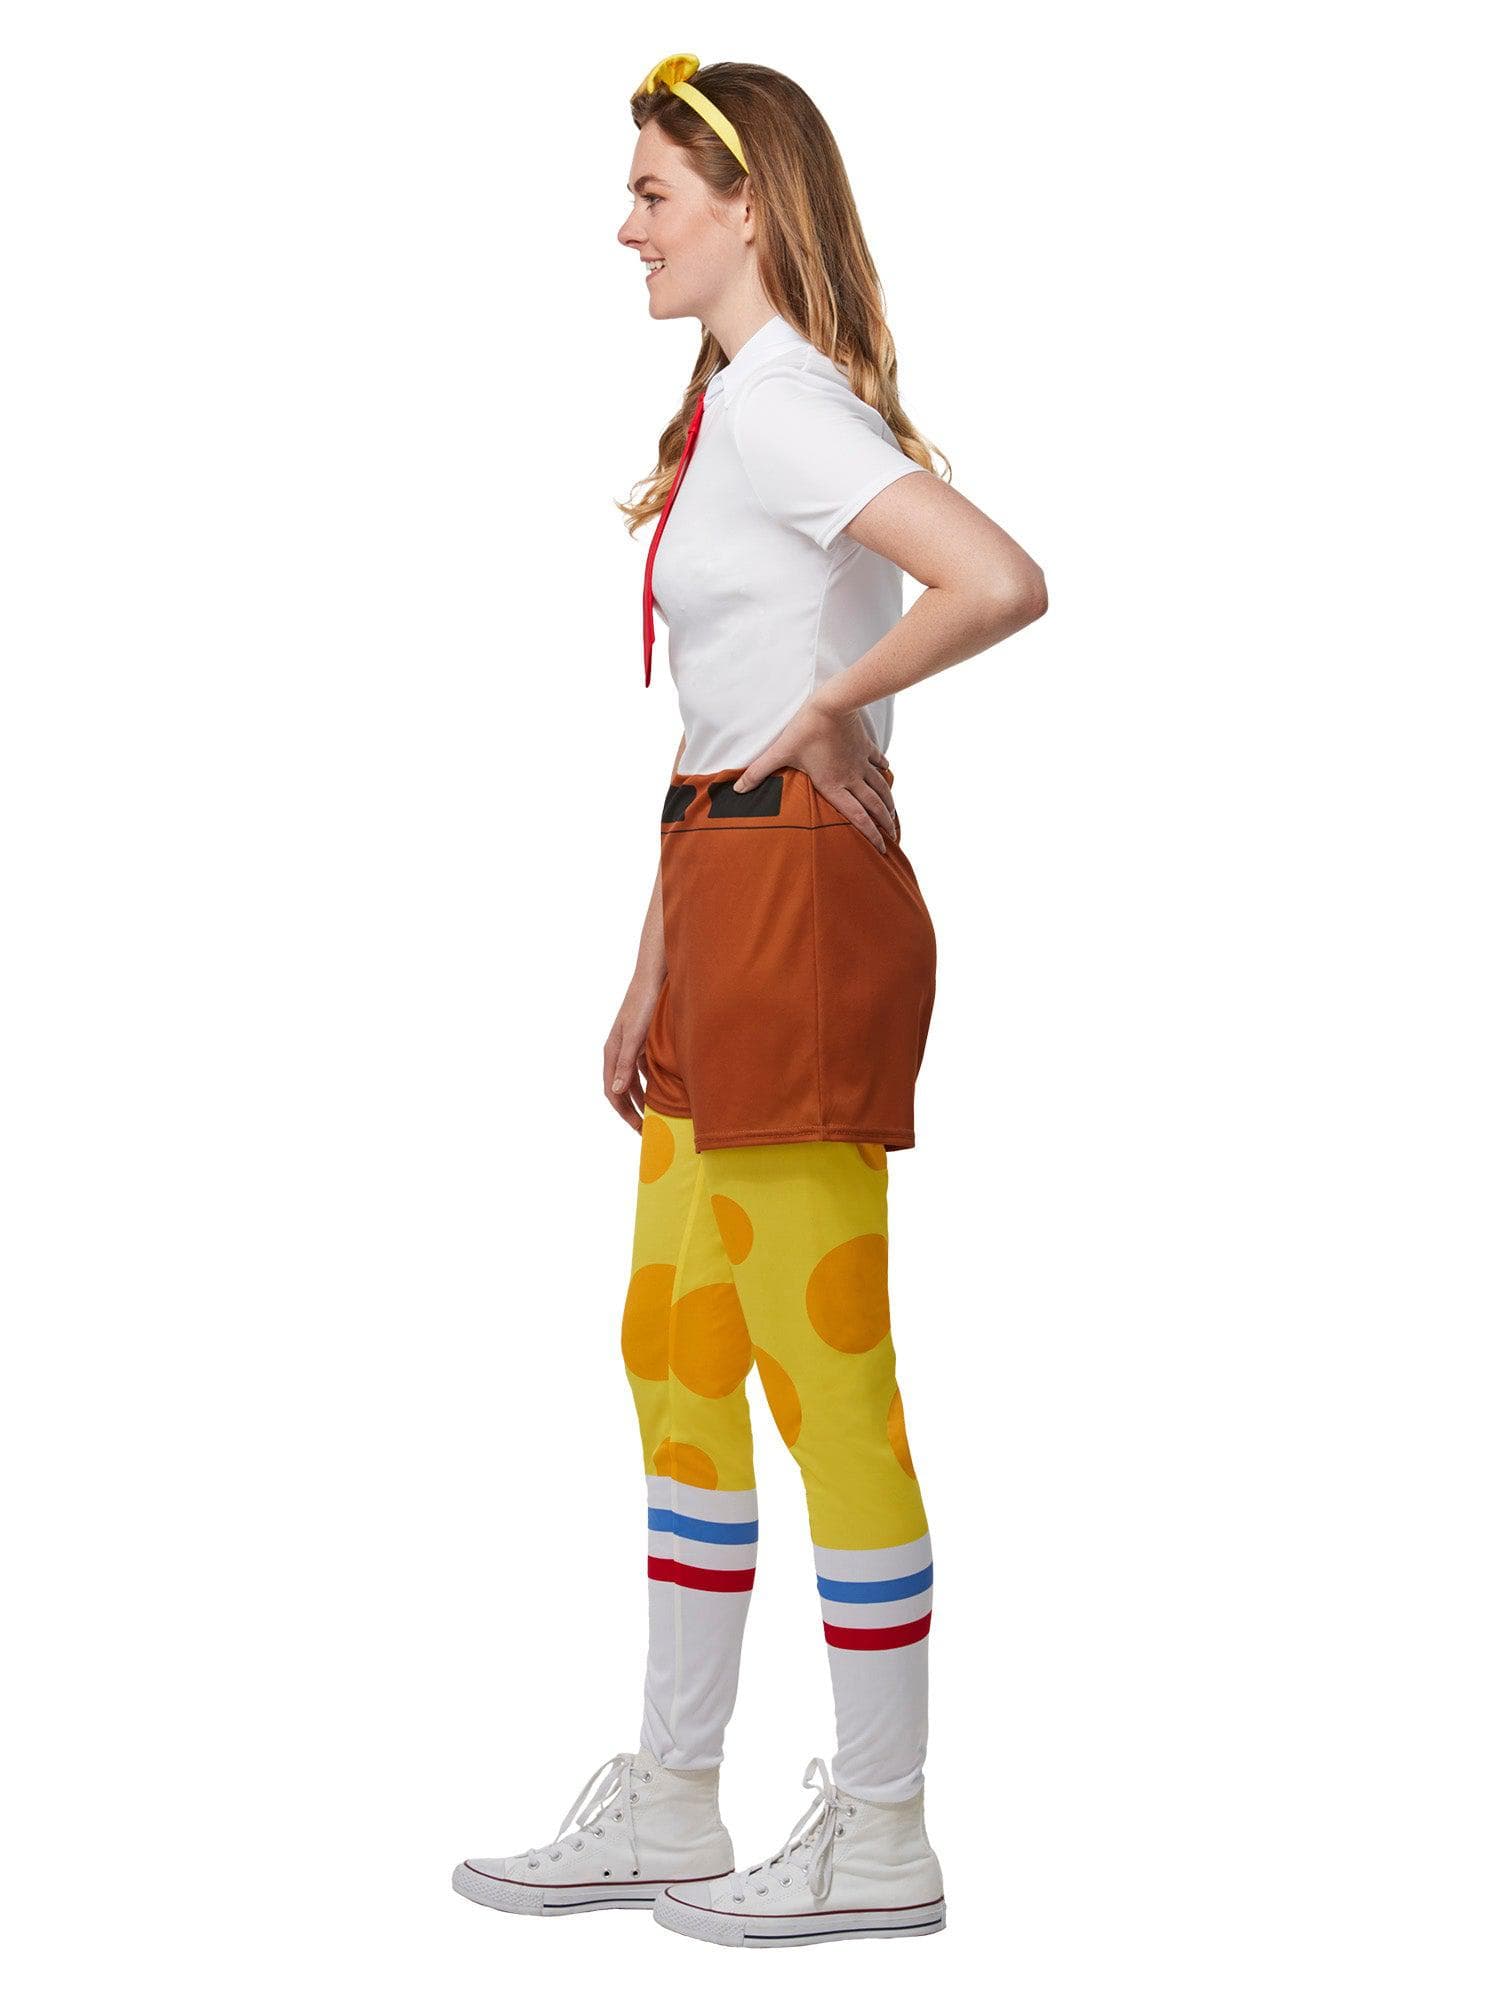 SpongeBob SquarePants Adult Romper Costume - costumes.com